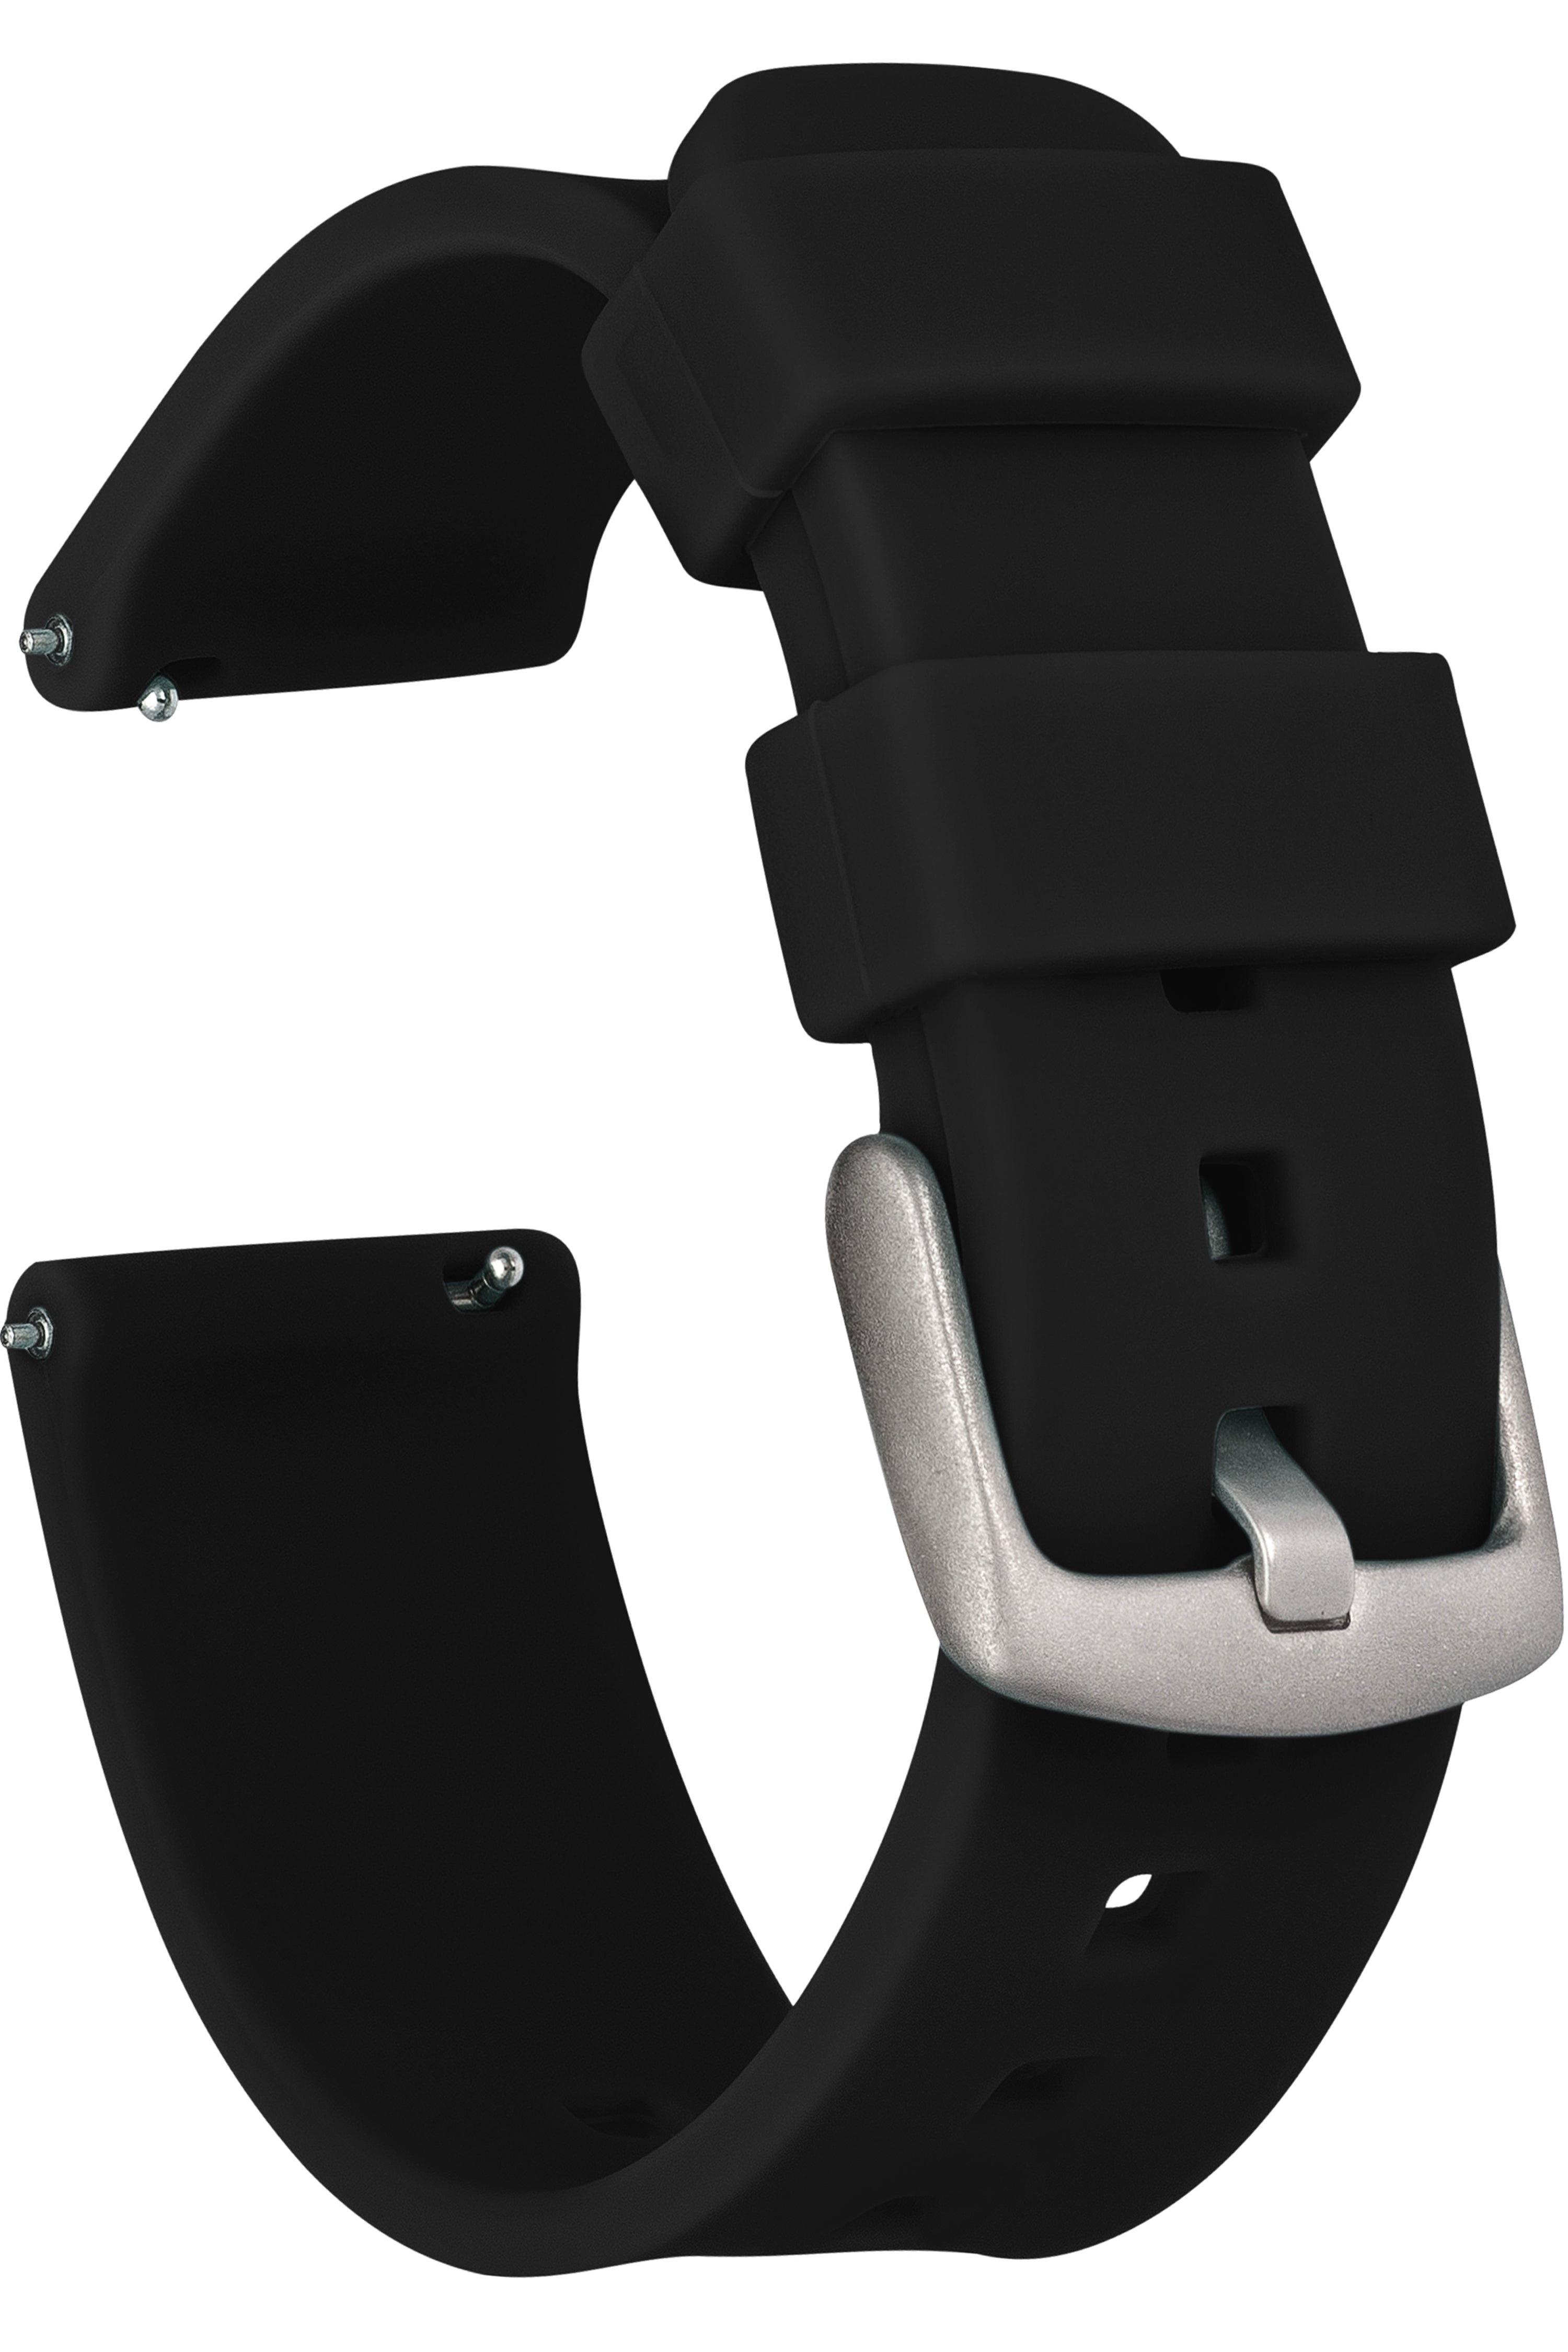 Las Vegas Raiders Debossed Silicone Watch Band (20mm) Black Mobile  Accessories - GP-ASORWB20BLK